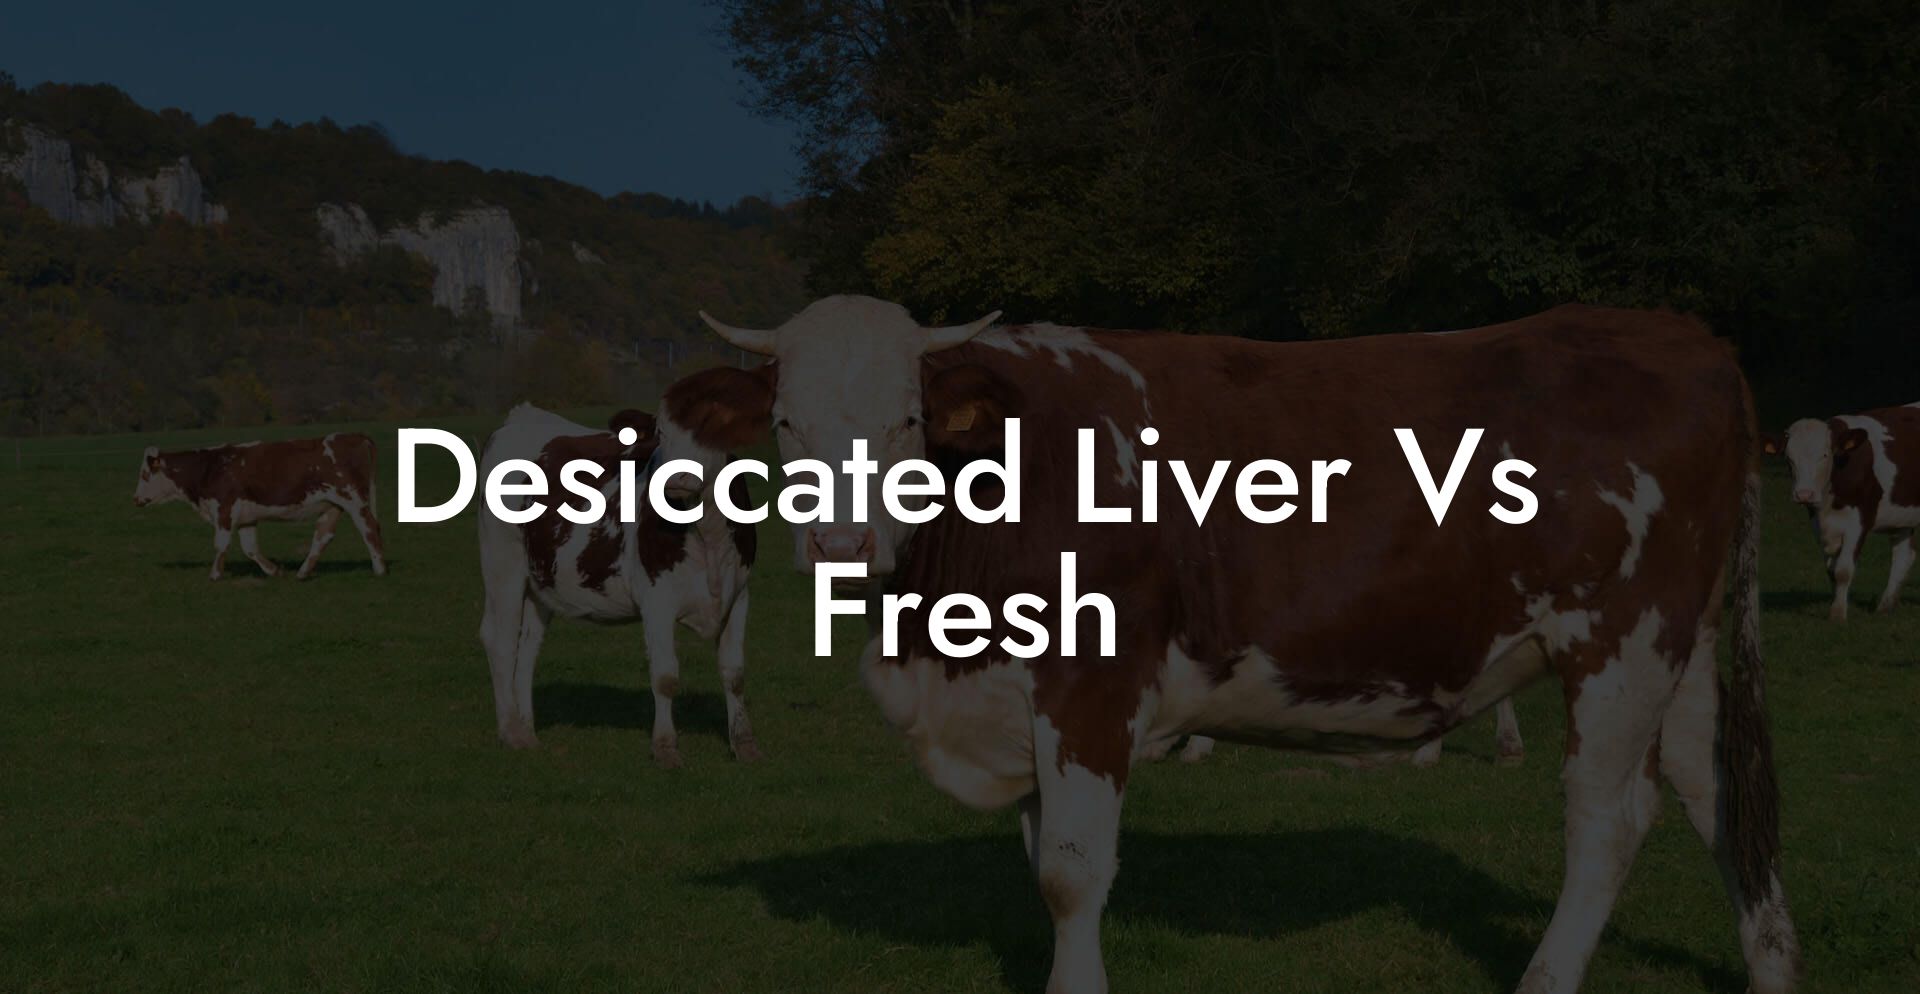 Desiccated Liver Vs Fresh